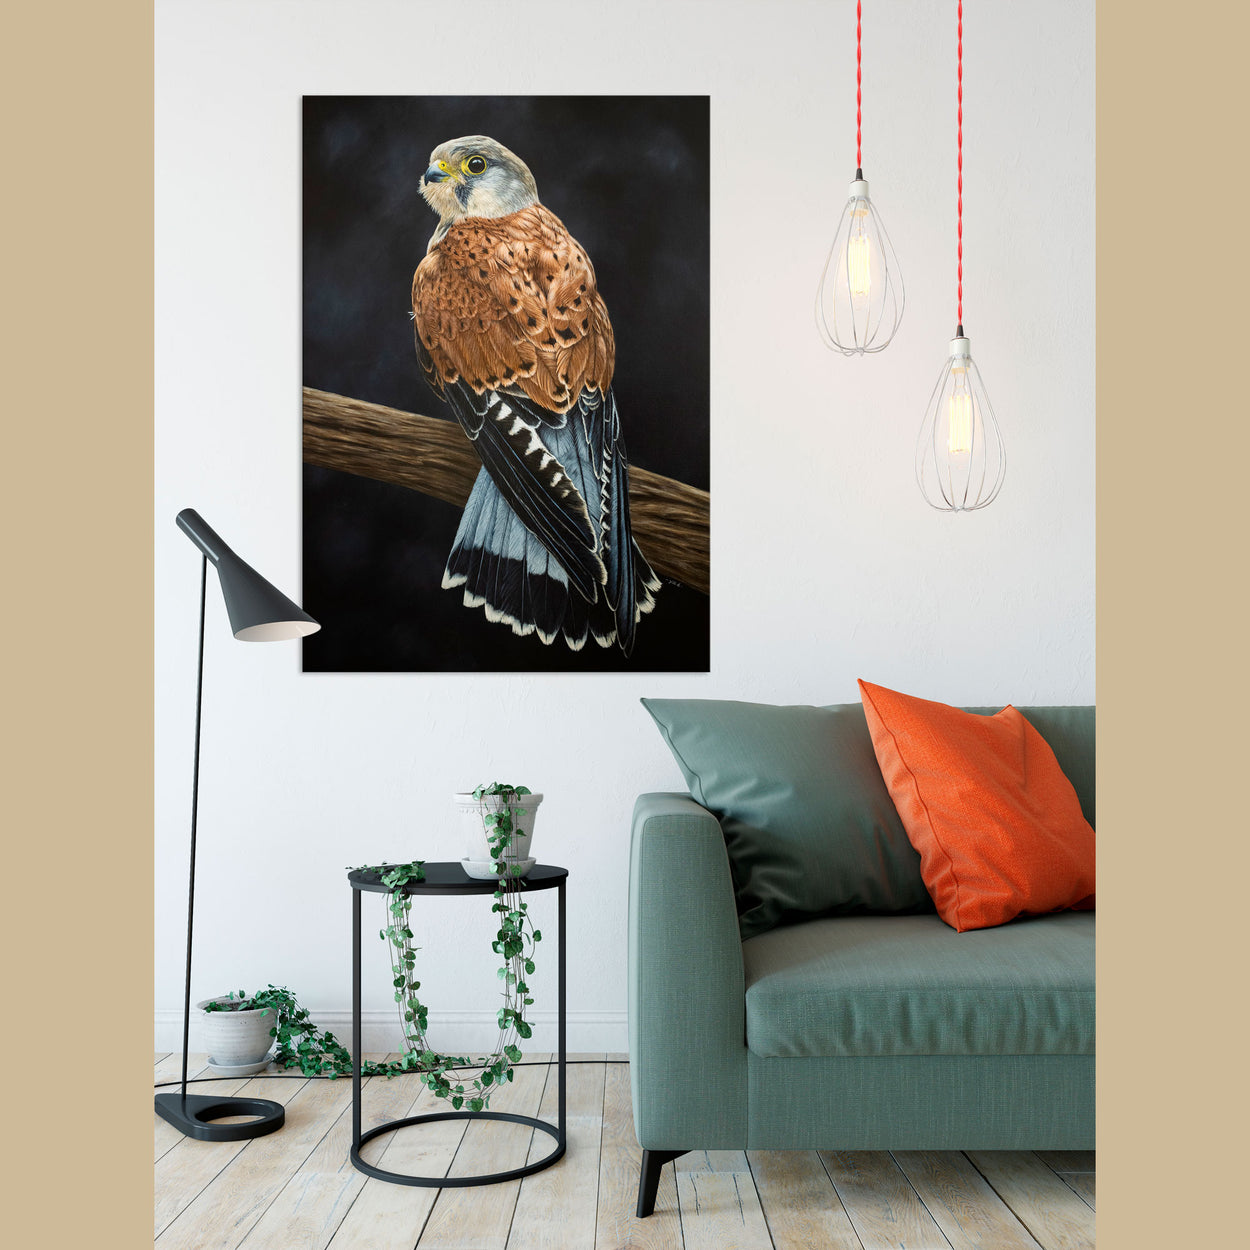 Common Kestrel Acrylic Painting on wall - Bird Art by Jill Dimond